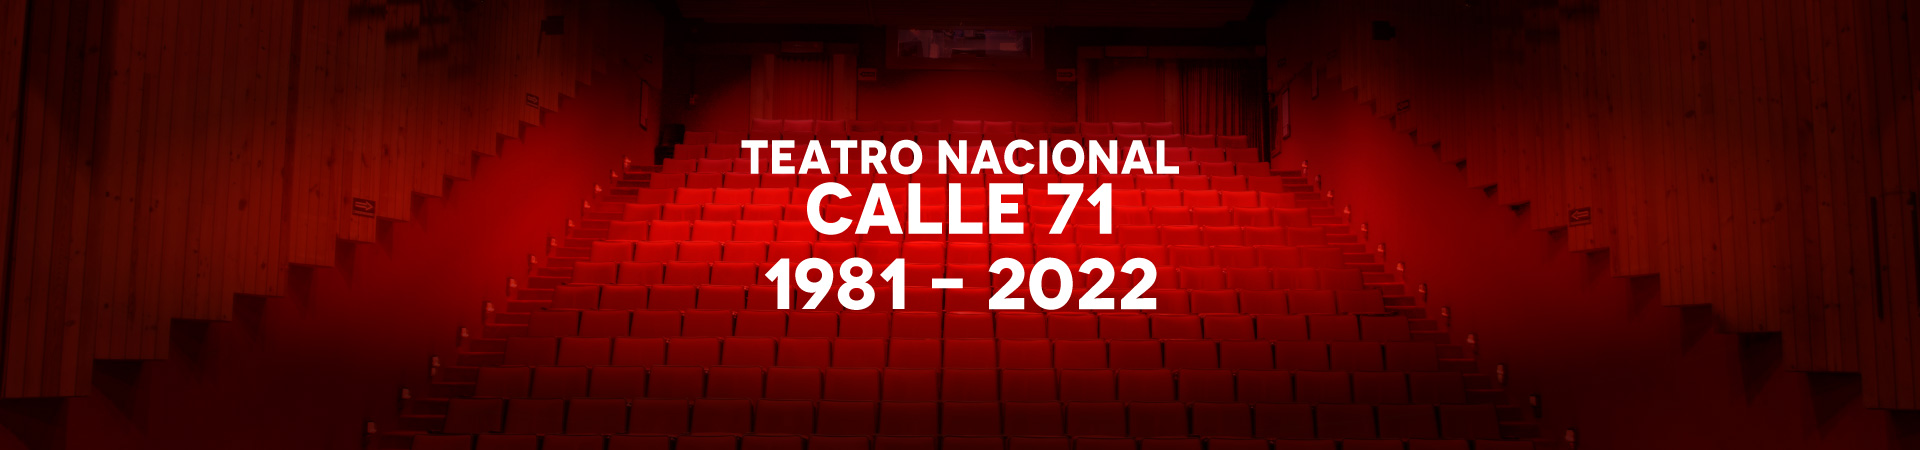 Memoria artística calle 71 - Teatro Nacional